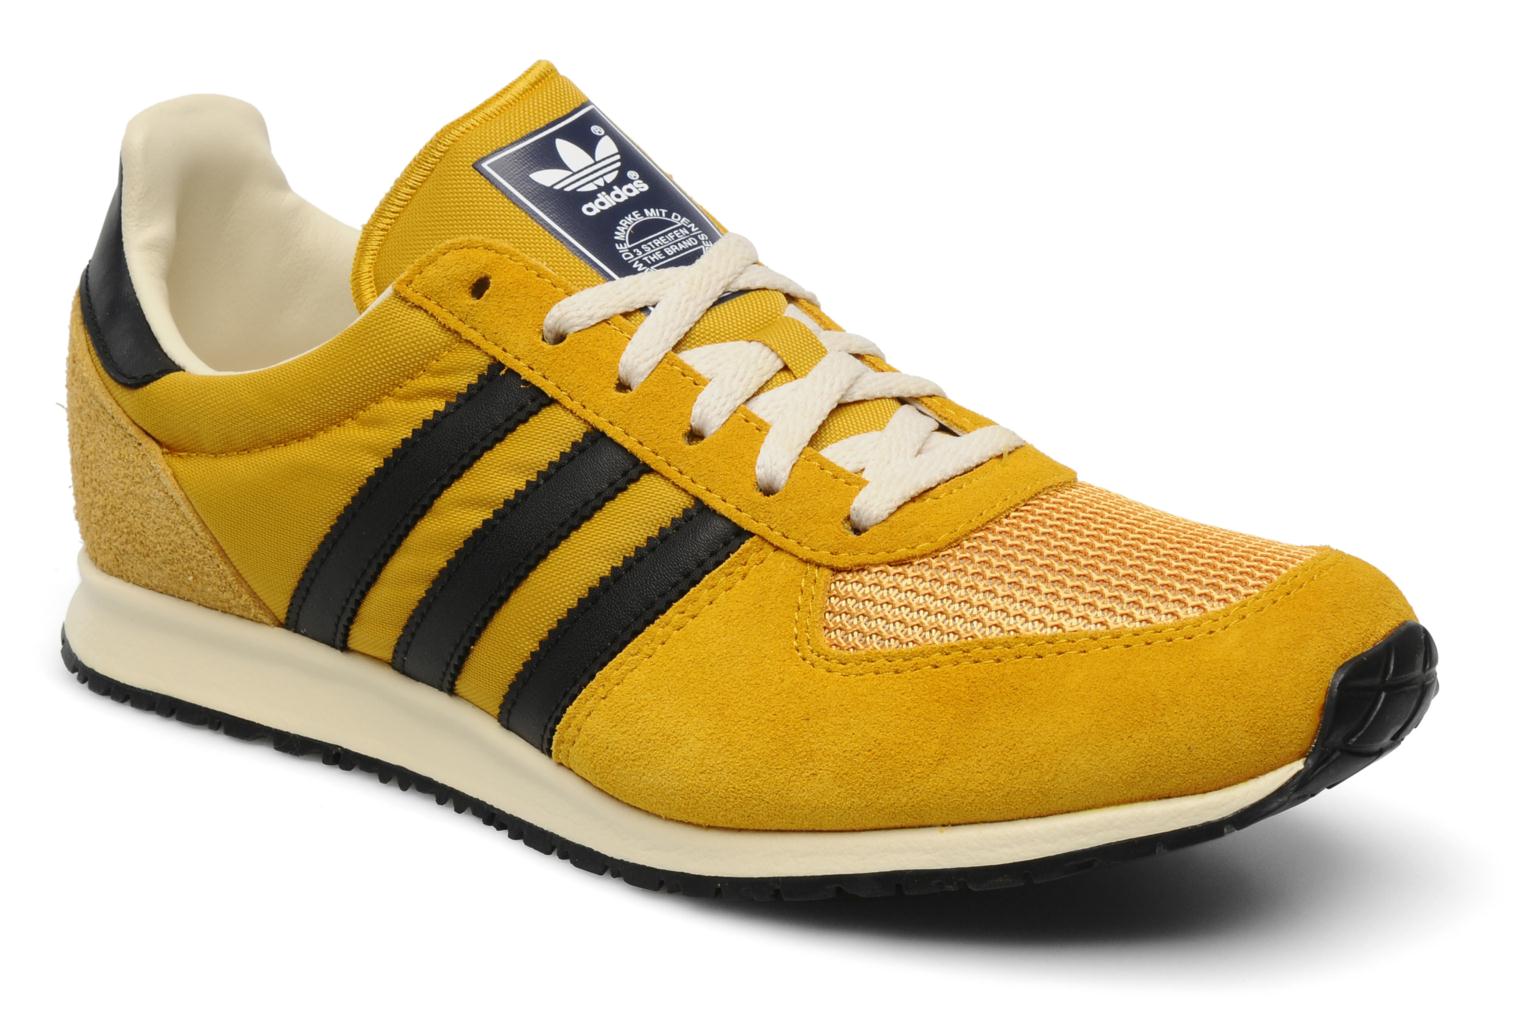 Adidas Originals Adistar Racer Trainers in Yellow at Sarenza.co.uk (109488)